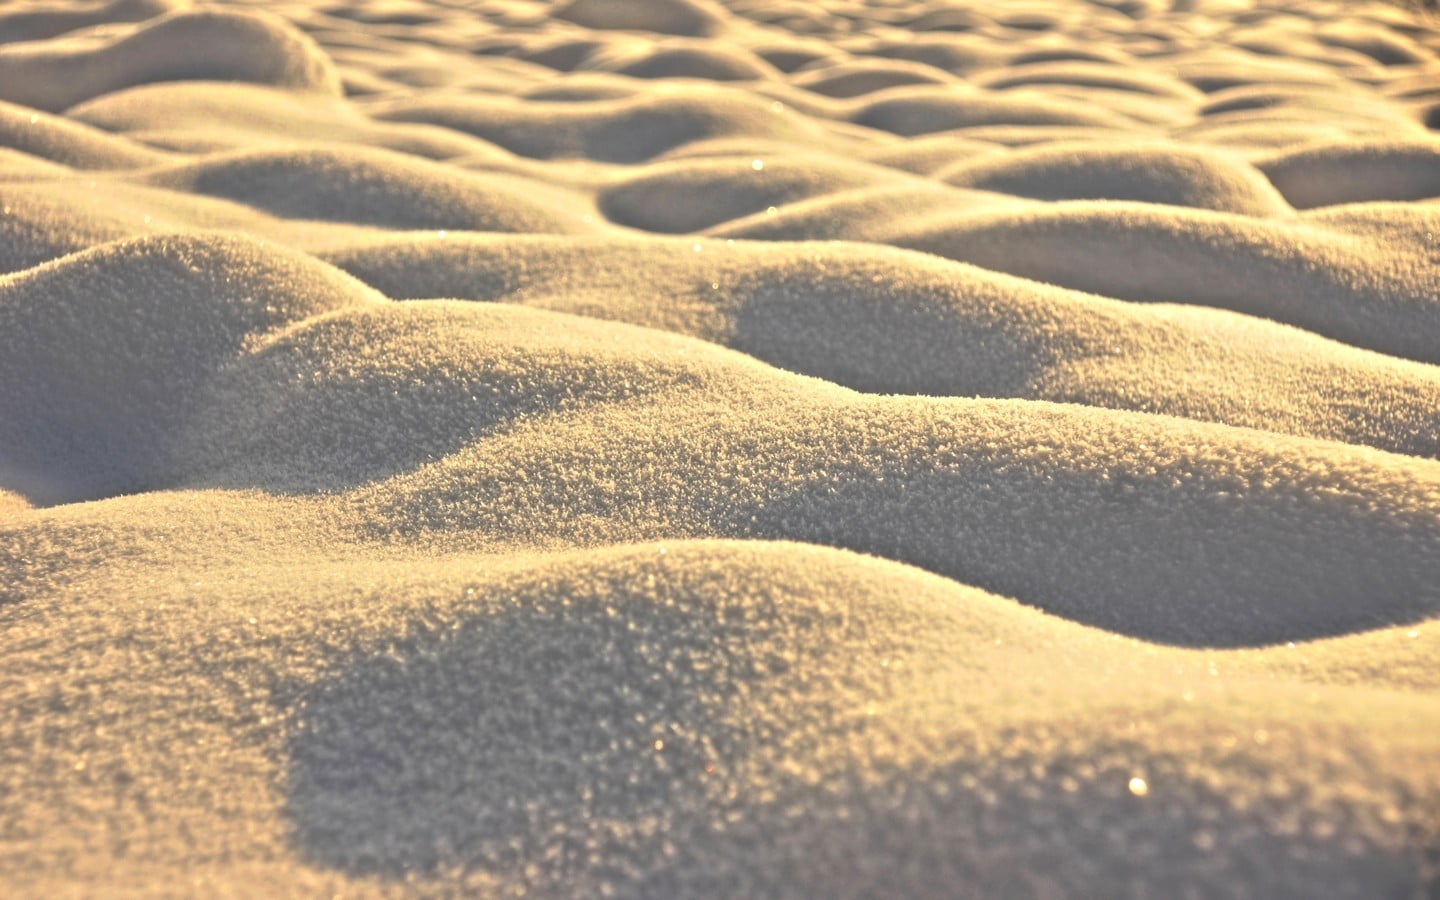 sand dunes digital wallpaper, sand, desert, yellow